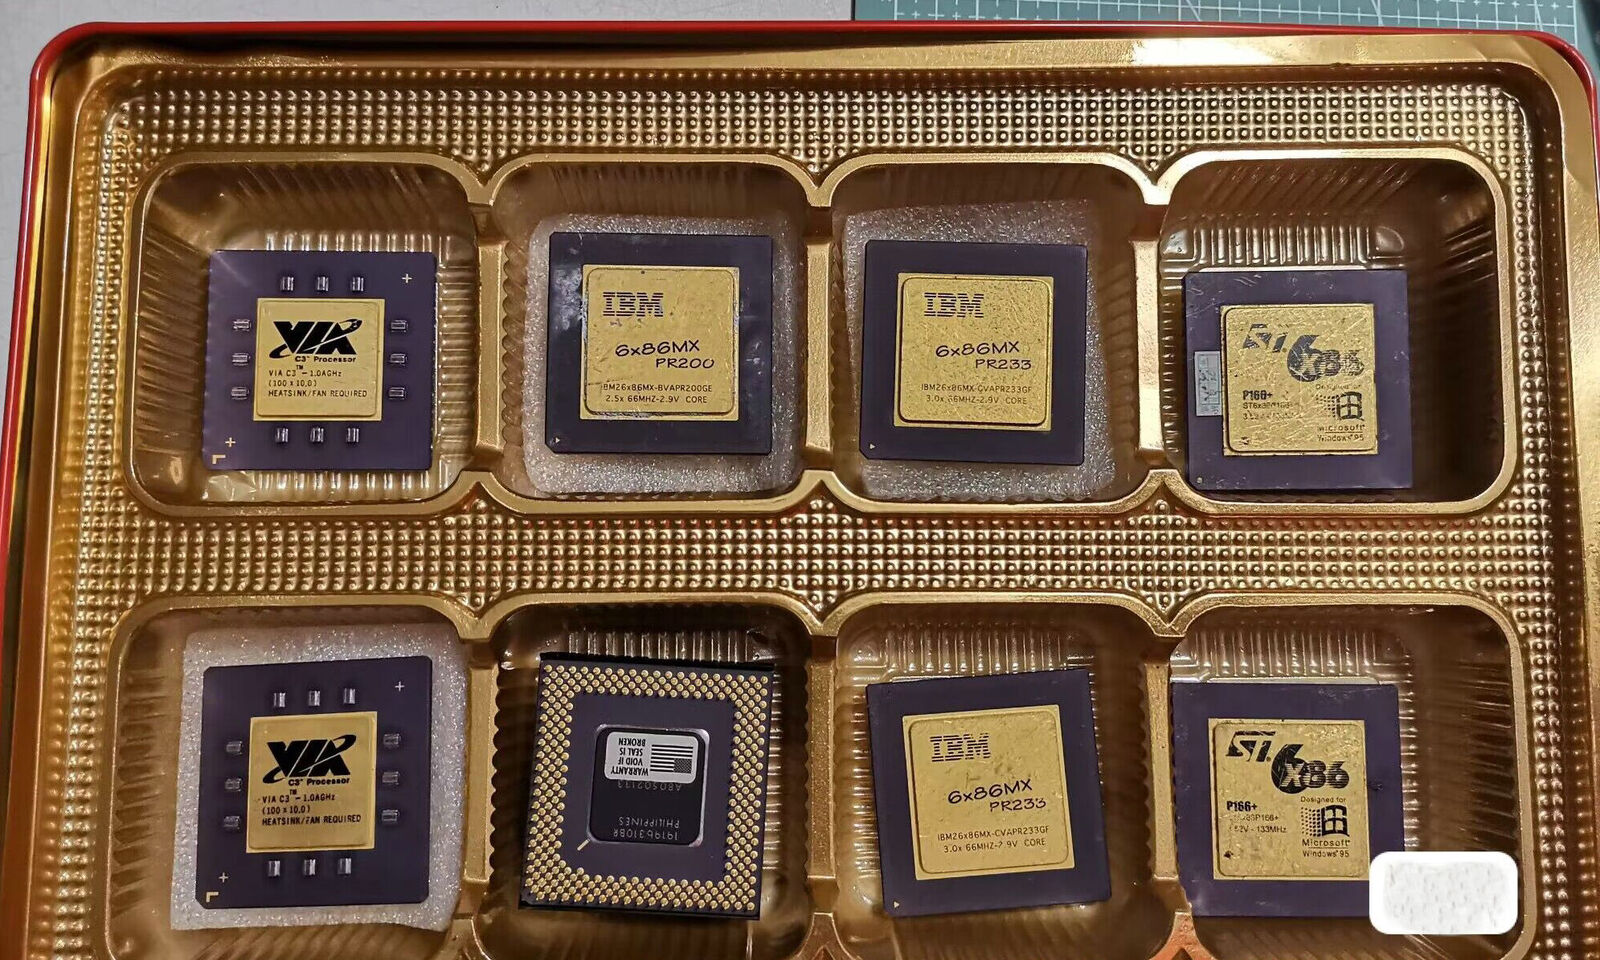 INTEL IBM ST Italian semiconductor, antique ceramic gold-plated CPU